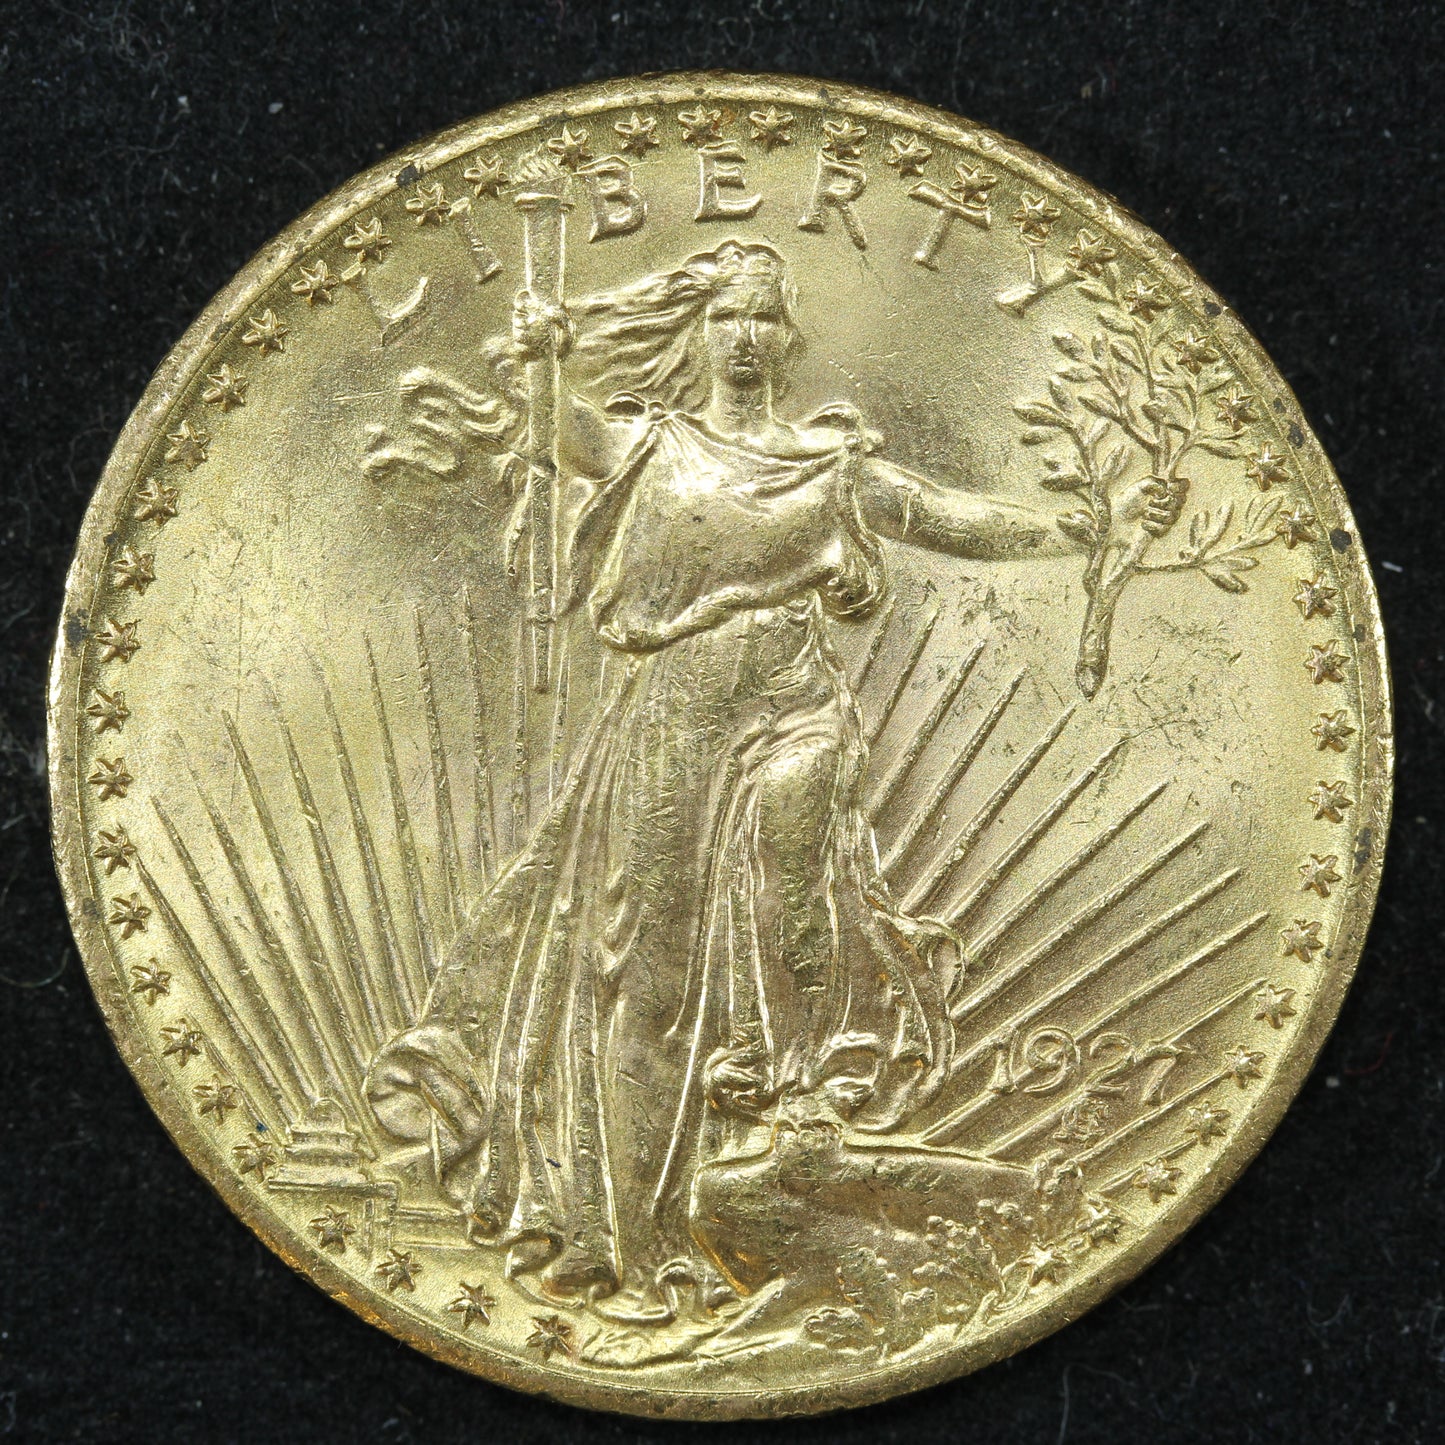 1927 (Philadelphia) $20 Gold St. Gaudens Double Eagle Gold Coin